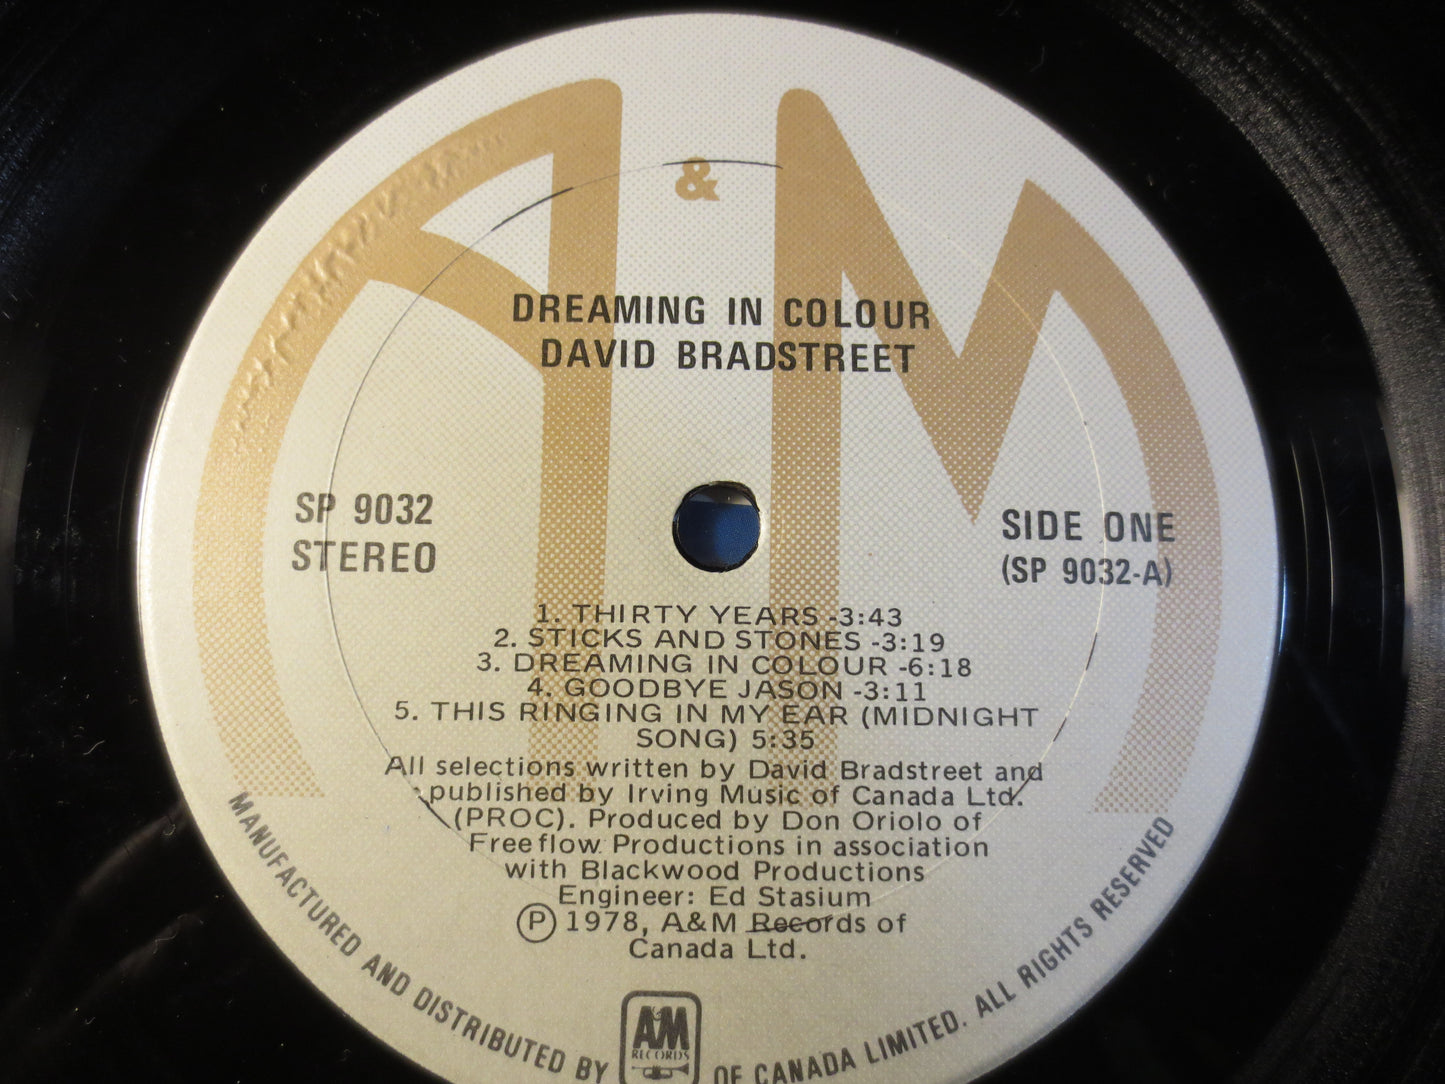 DAVID BRADSTREET, DREAMING in Colour, David Bradstreet Lp, Folk Records, Vinyl Records, Record Vinyl, Records, 1978 Records